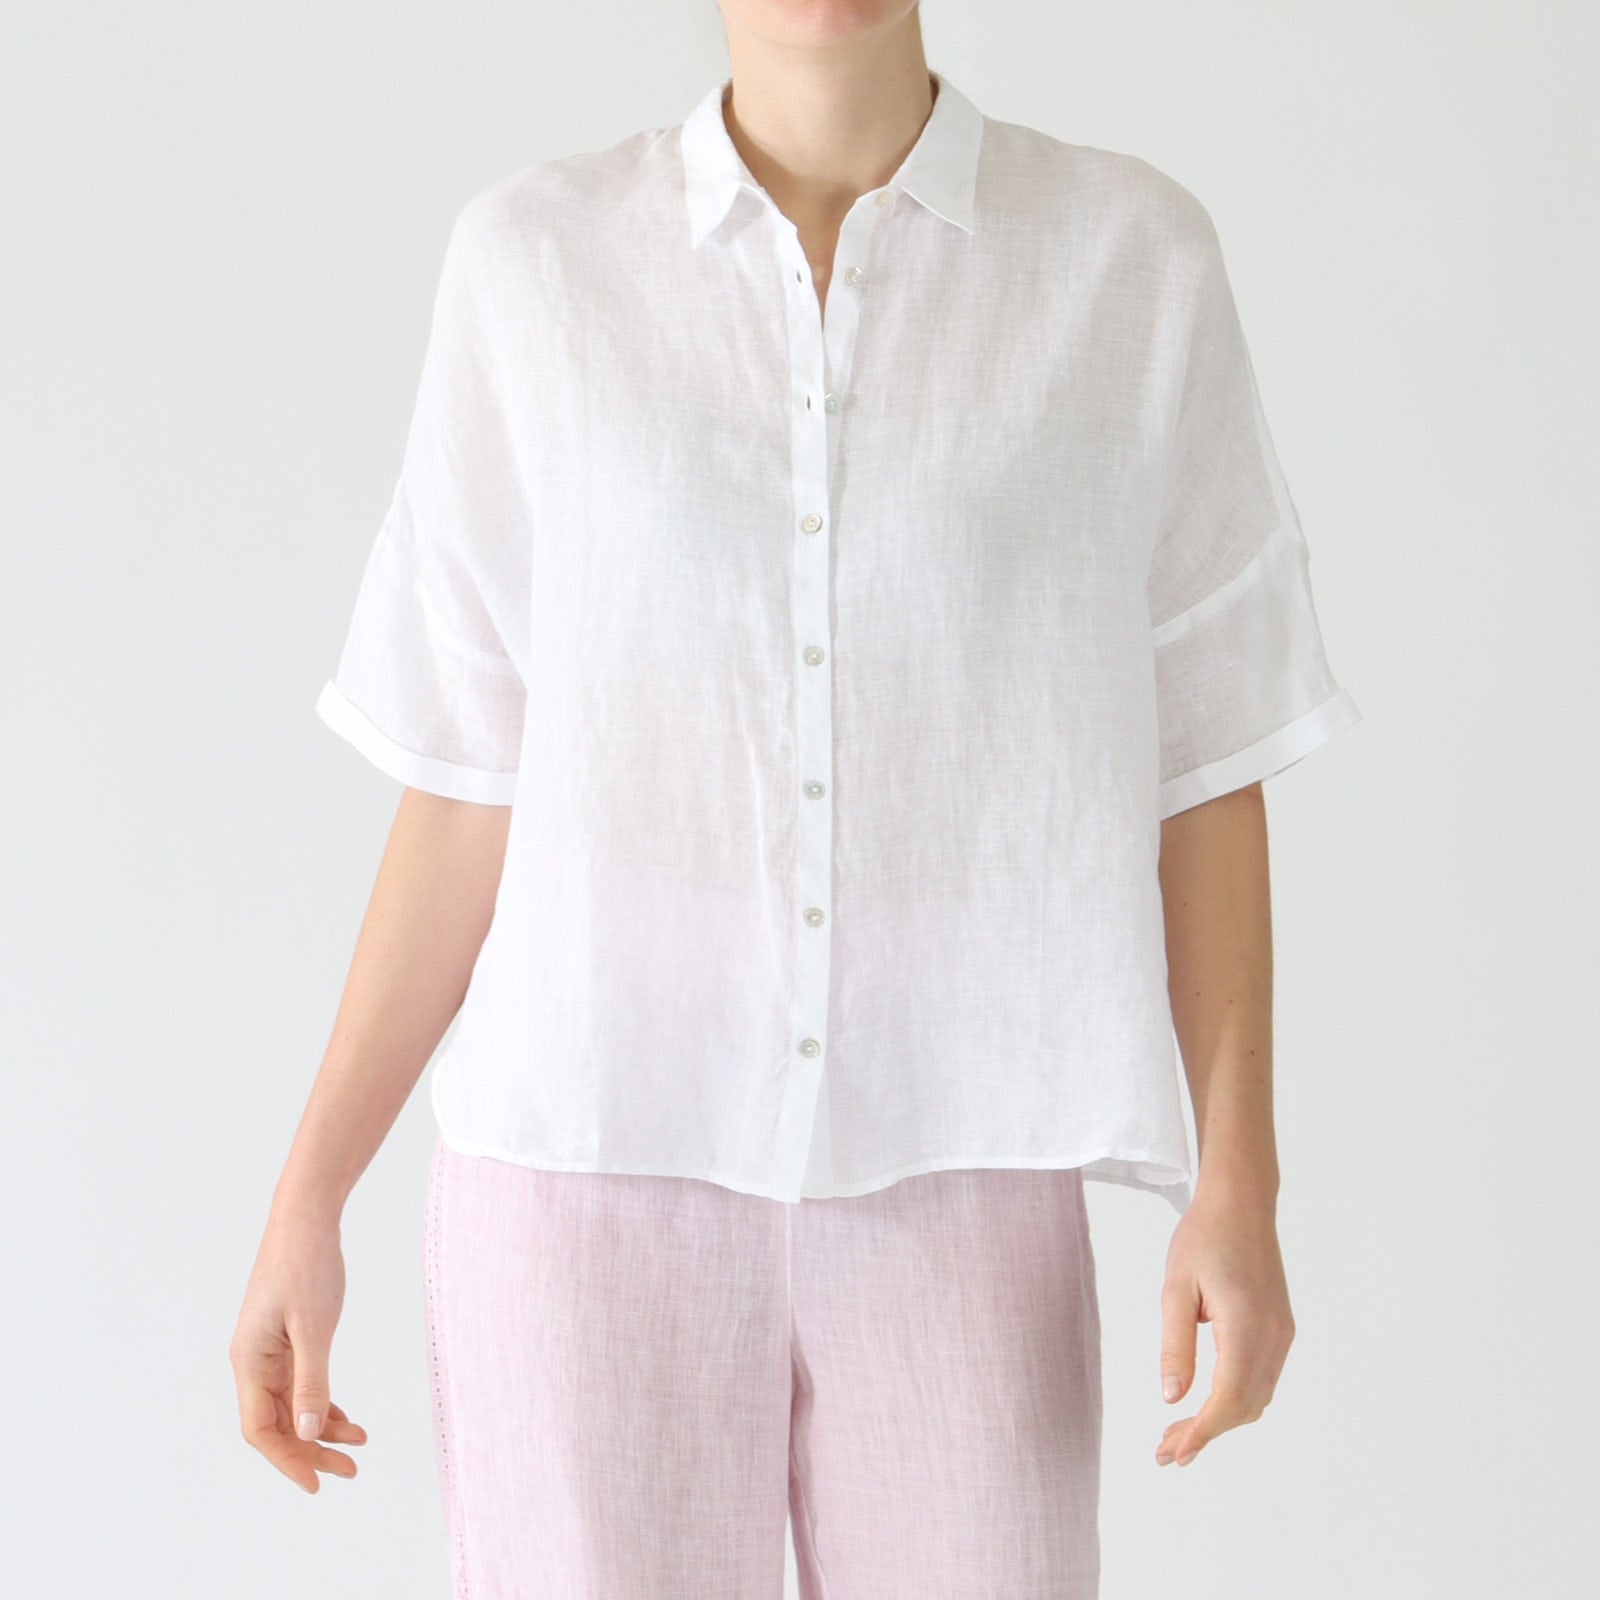 White Linen Shirt With Lace Yoke